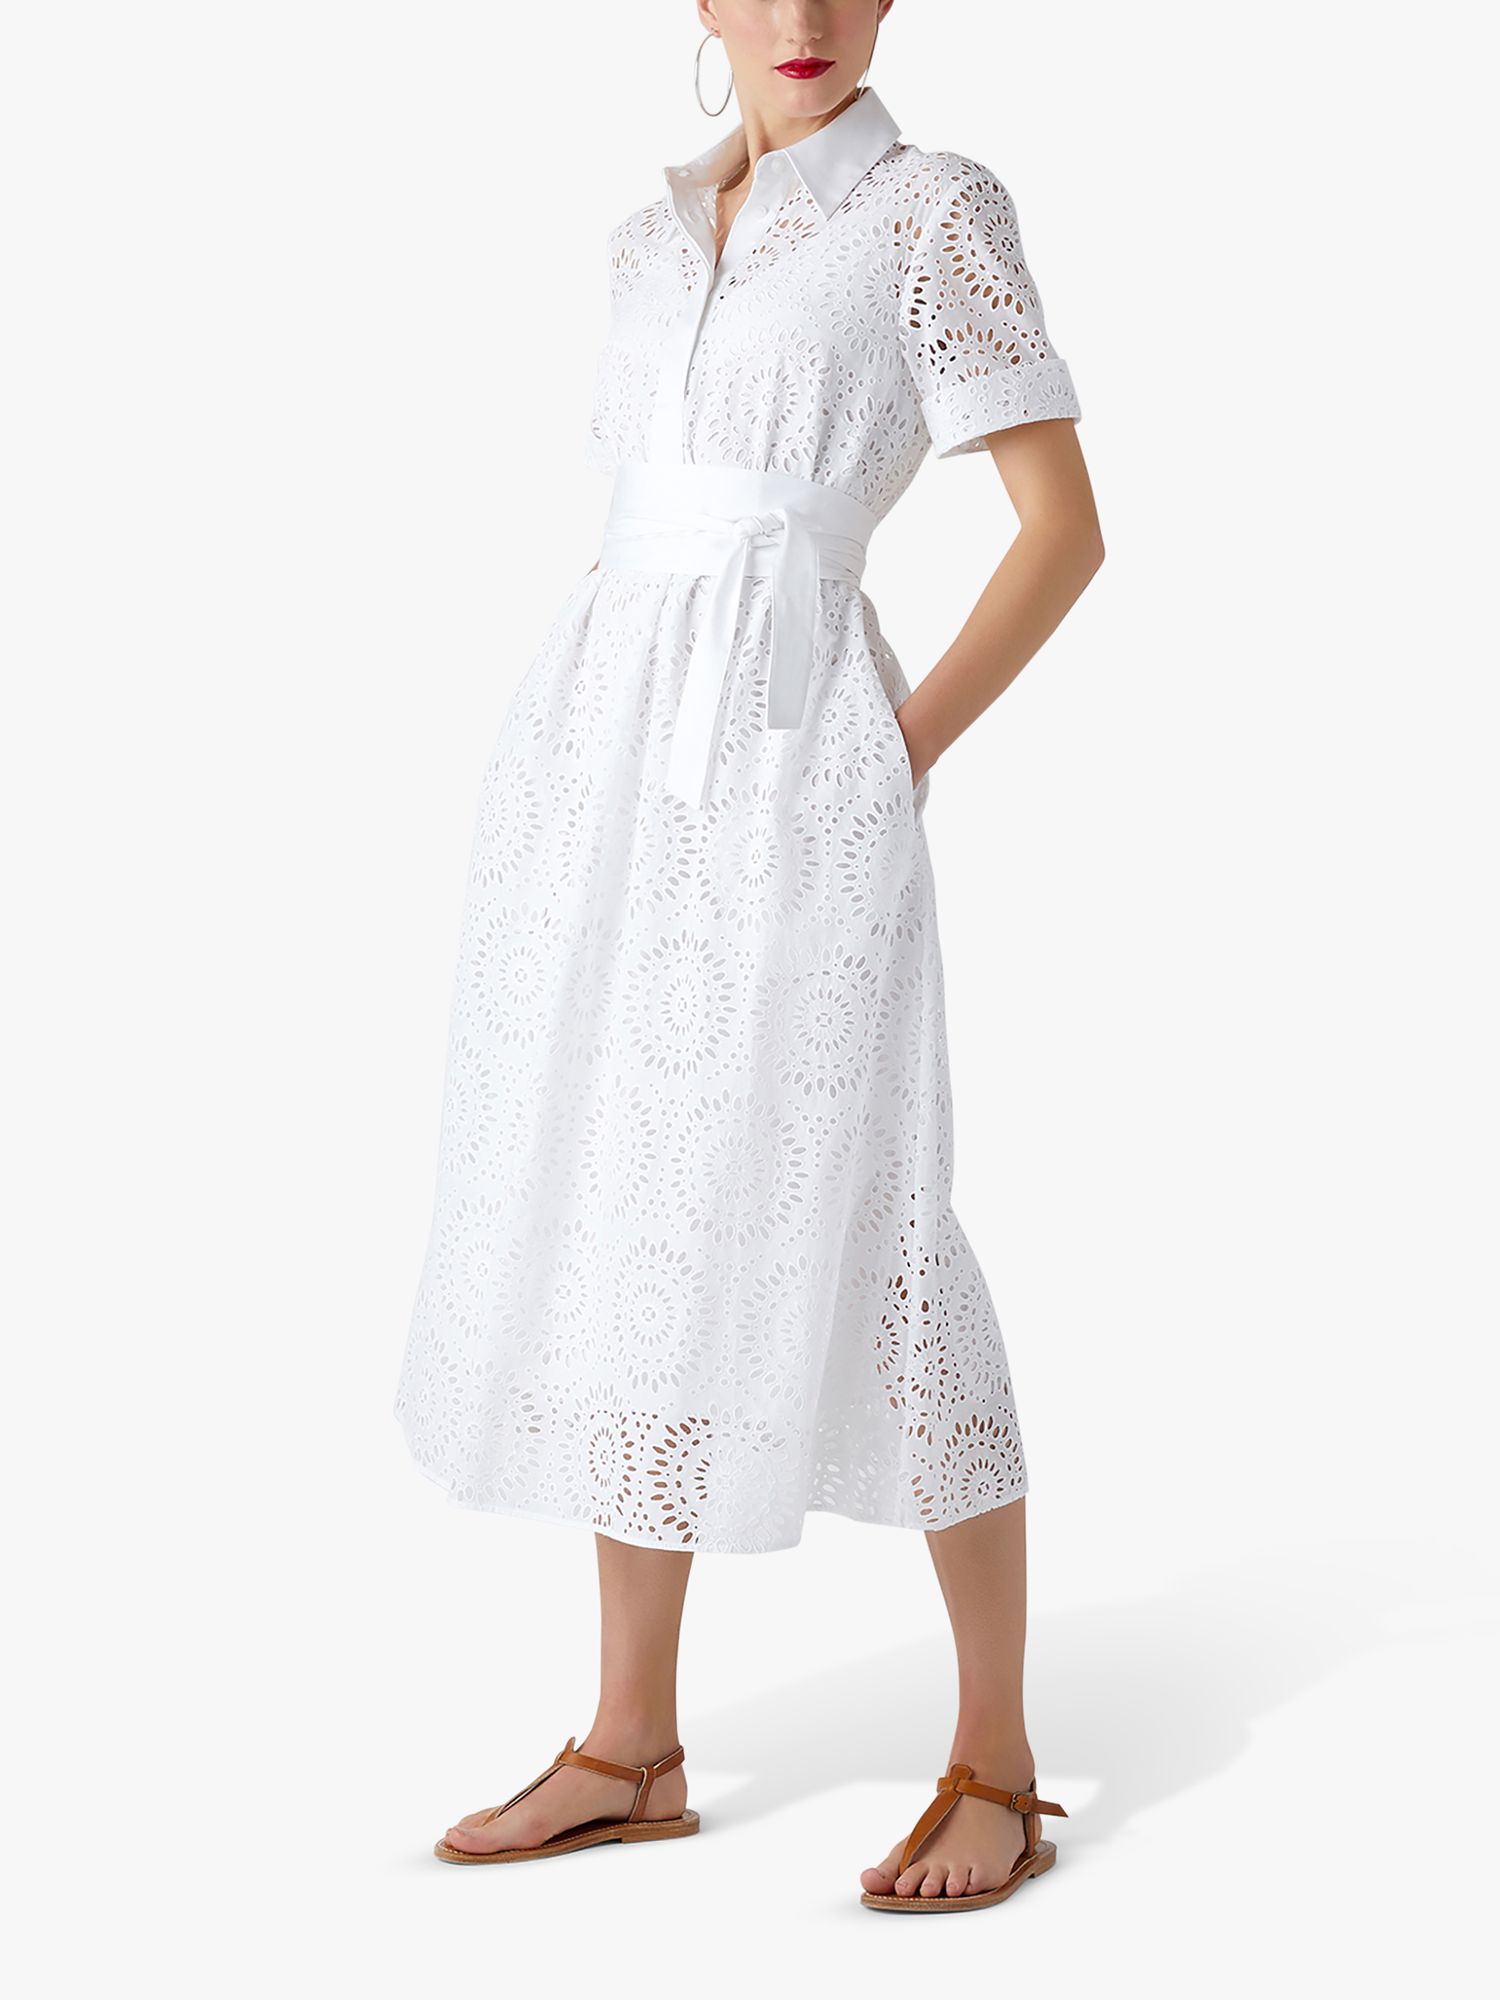 Jasper Conran London Daria Broderie Dress, White at John Lewis & Partners